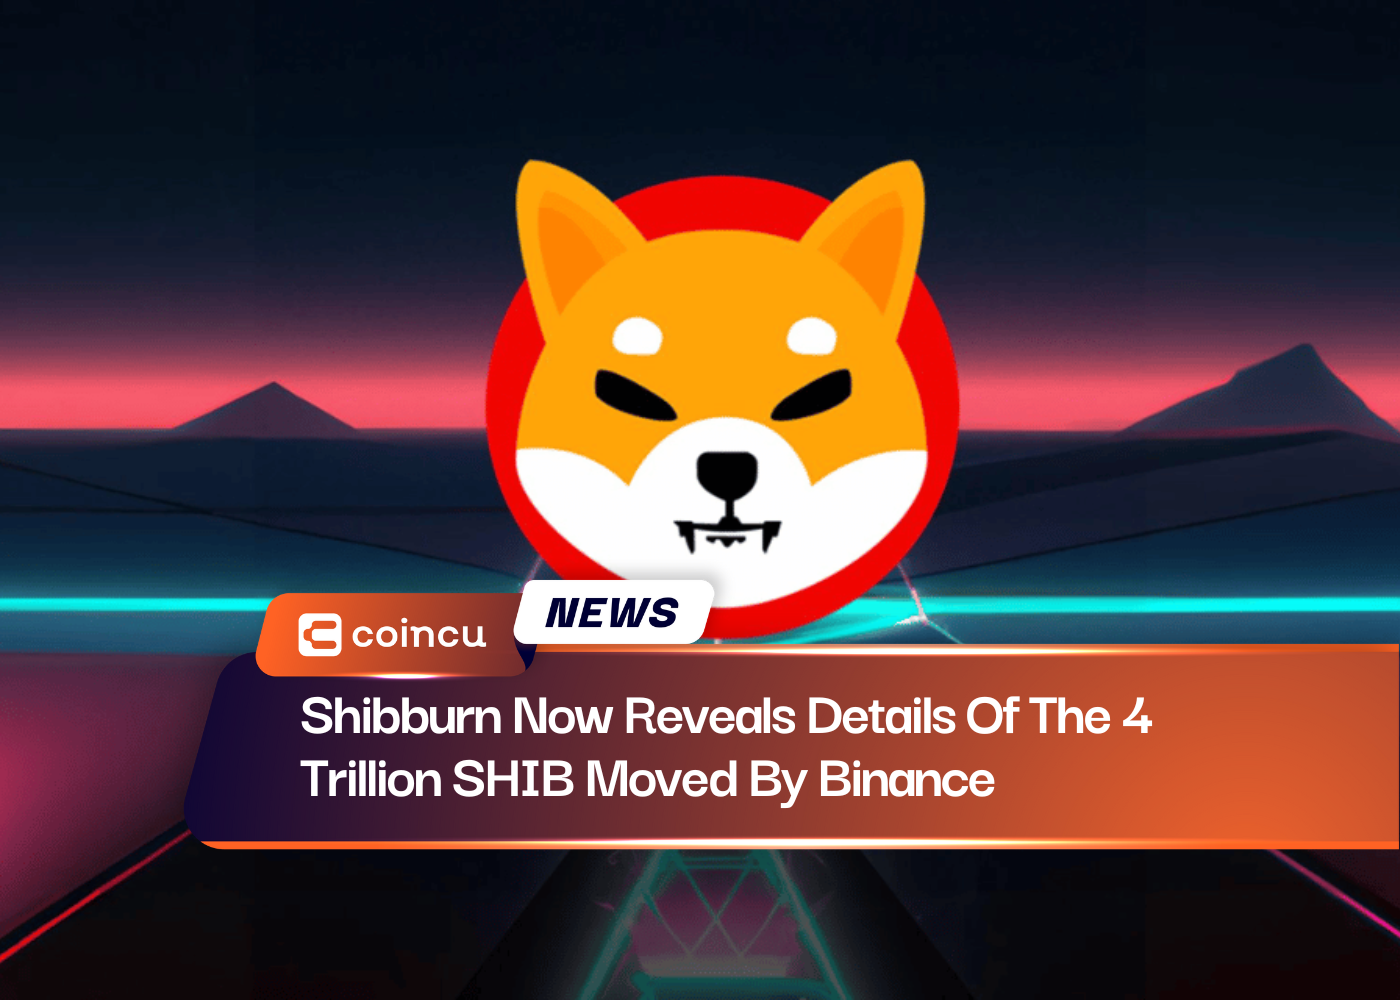 Shibburn Now Reveals Details Of The 4 Trillion SHIB Moved By Binance